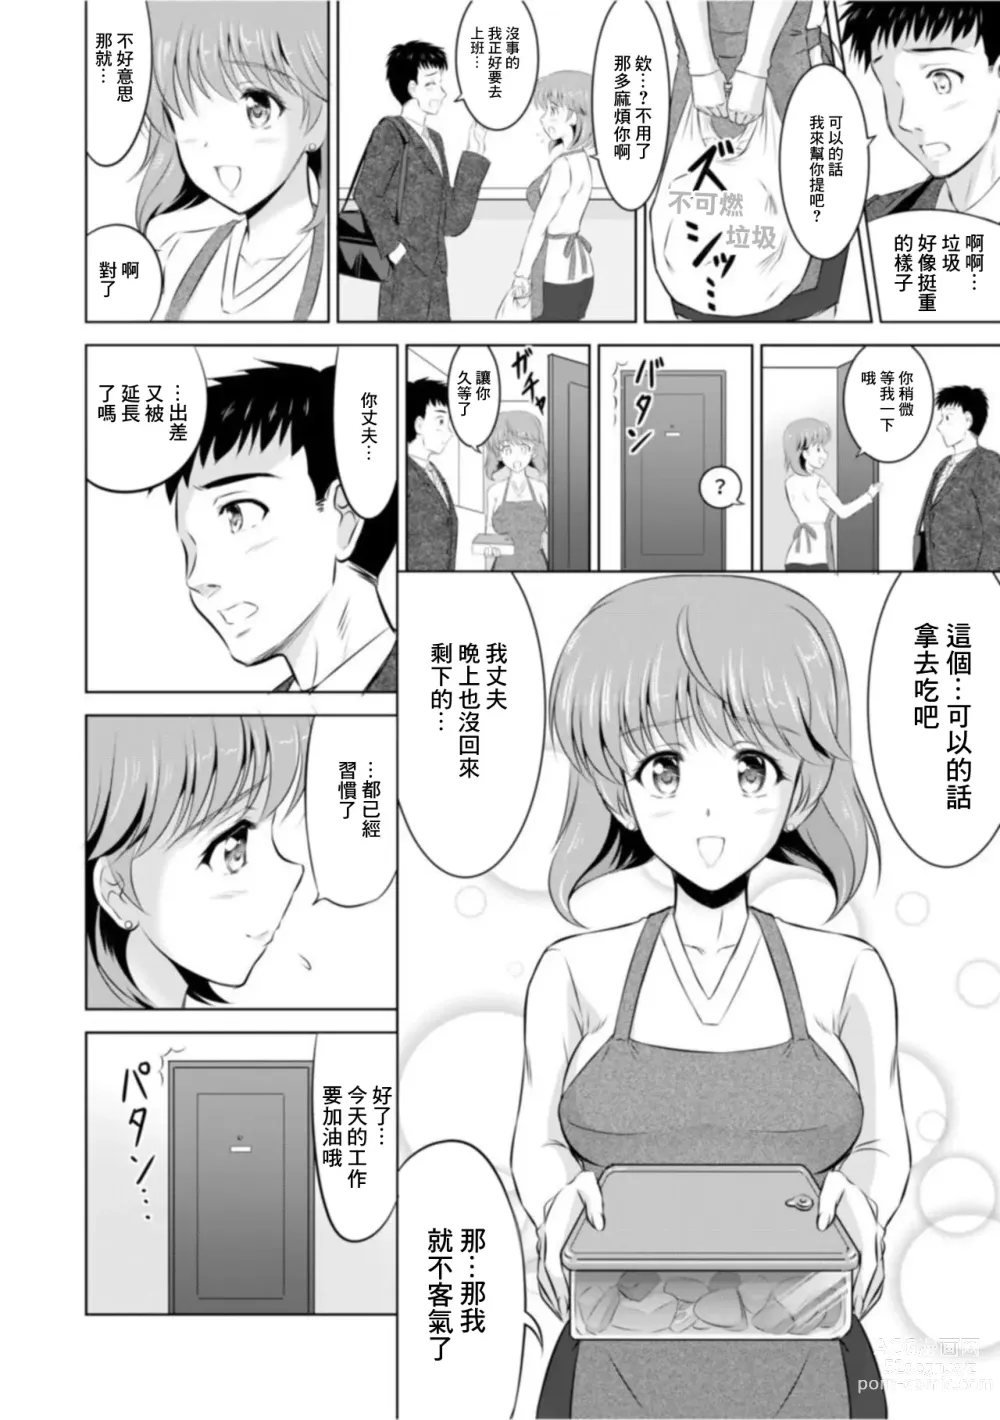 Page 6 of doujinshi 隔壁人妻對於Cosplay做愛非常擅長...